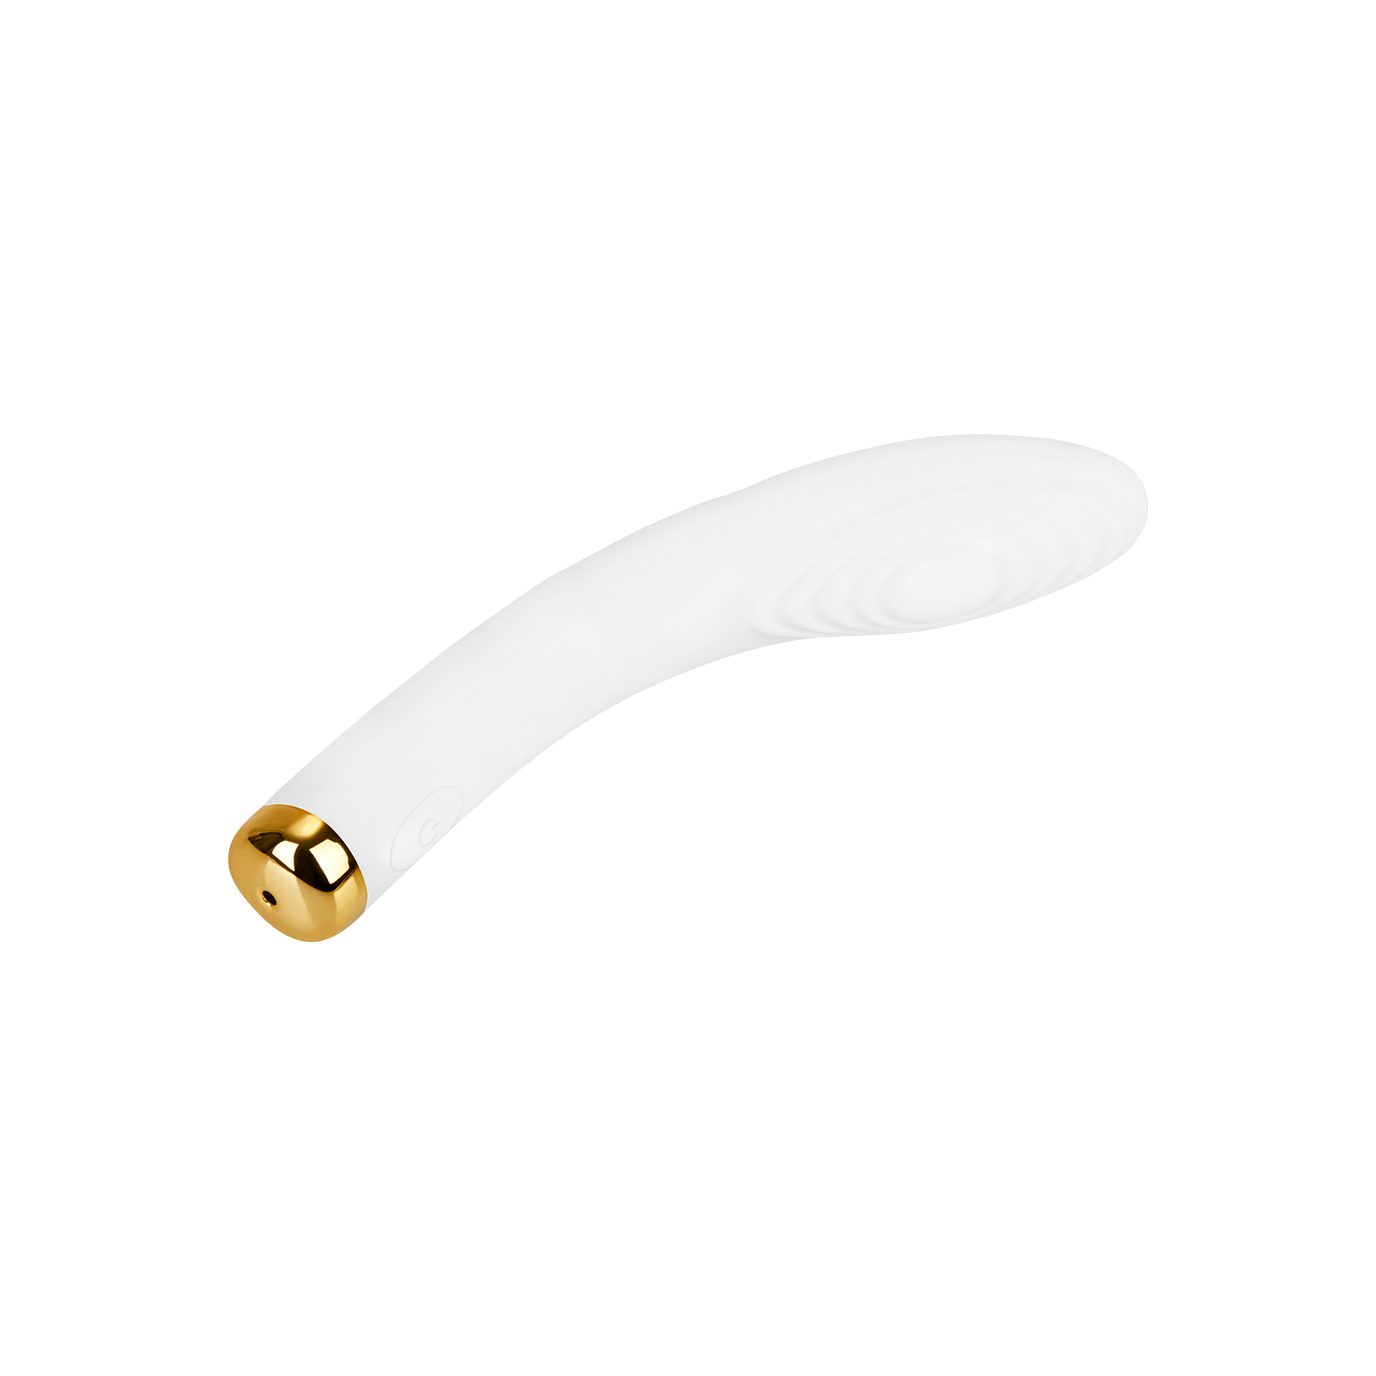 Silikon, G-Spot EIS aus wasserdicht (IPX7) 18 cm, EIS Vibrator Klitoris-Stimulator